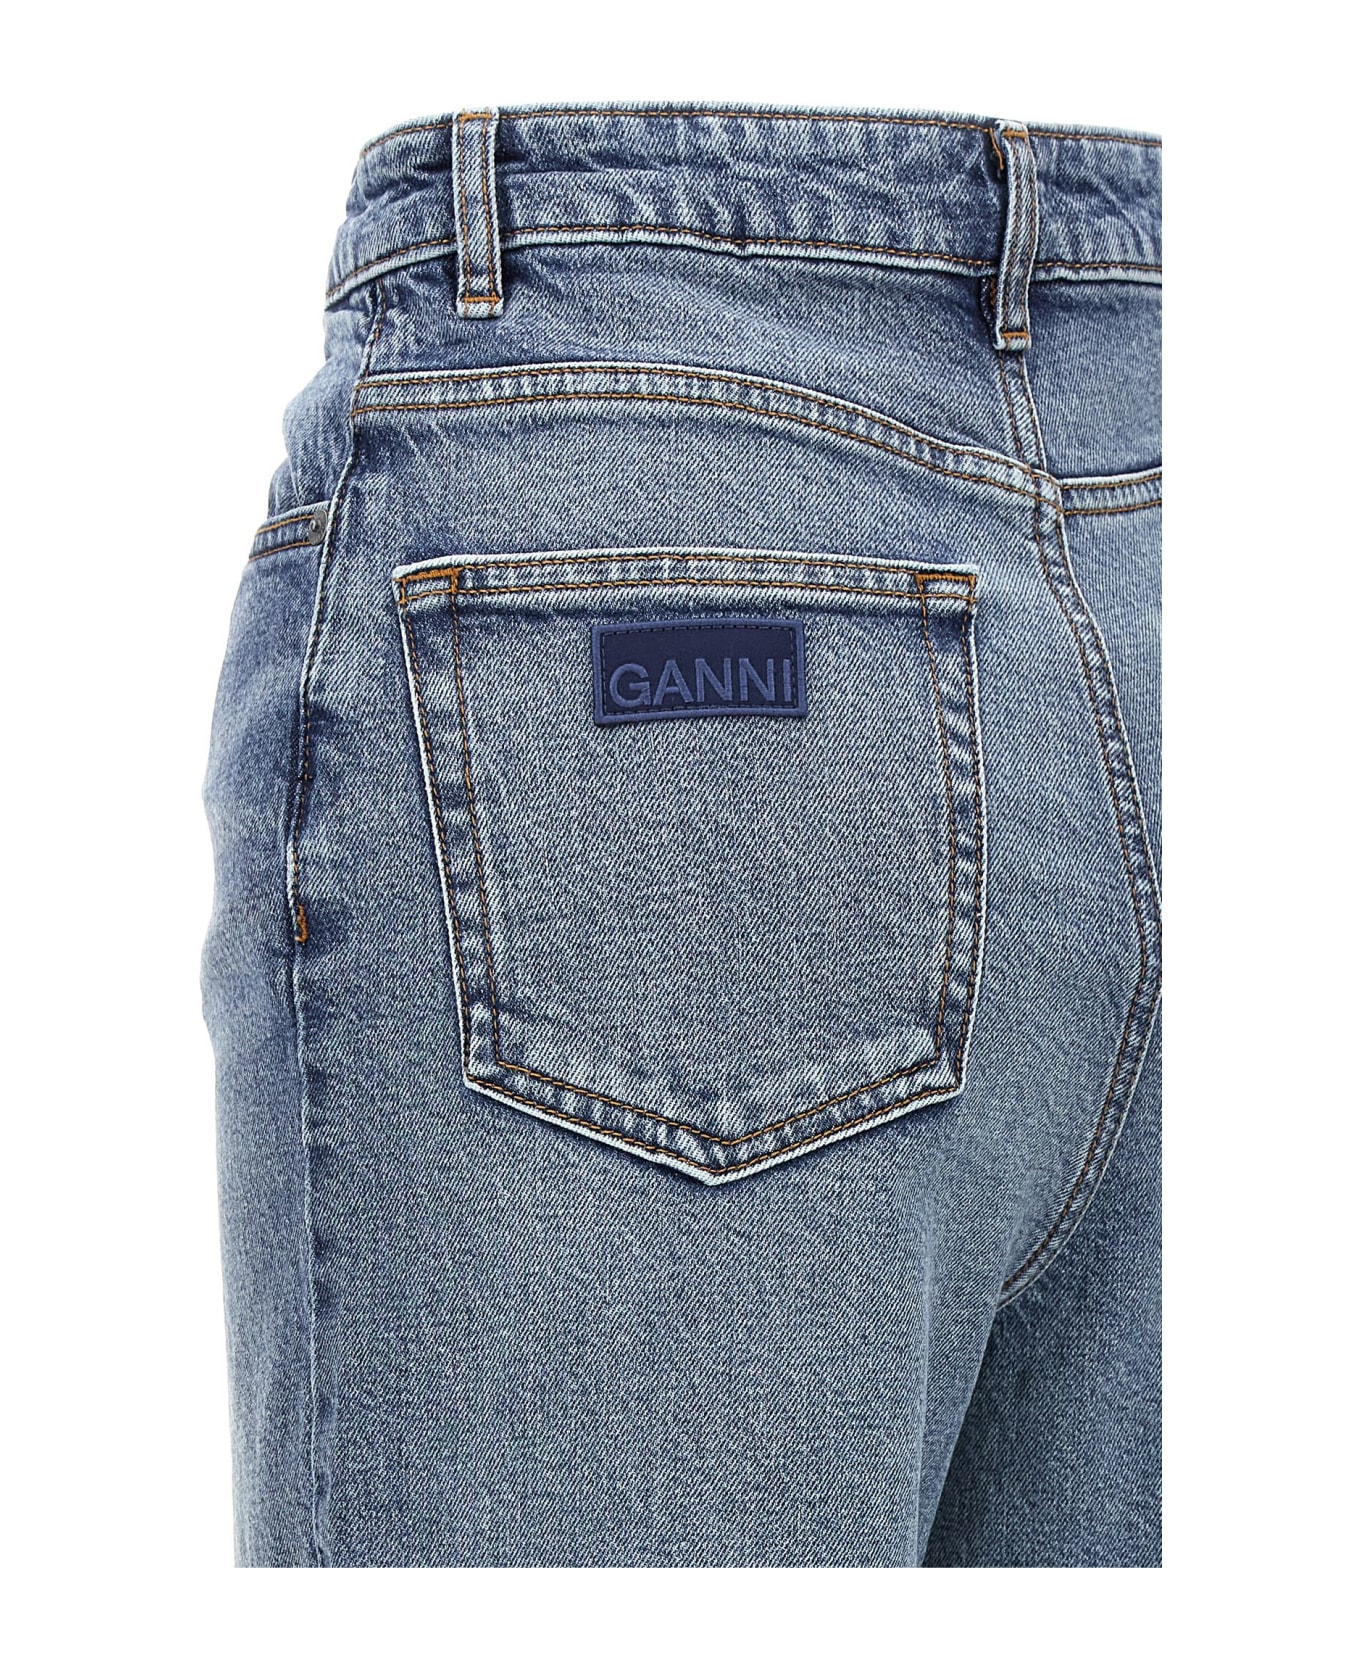 Ganni 'andi' Jeans - Blue デニム